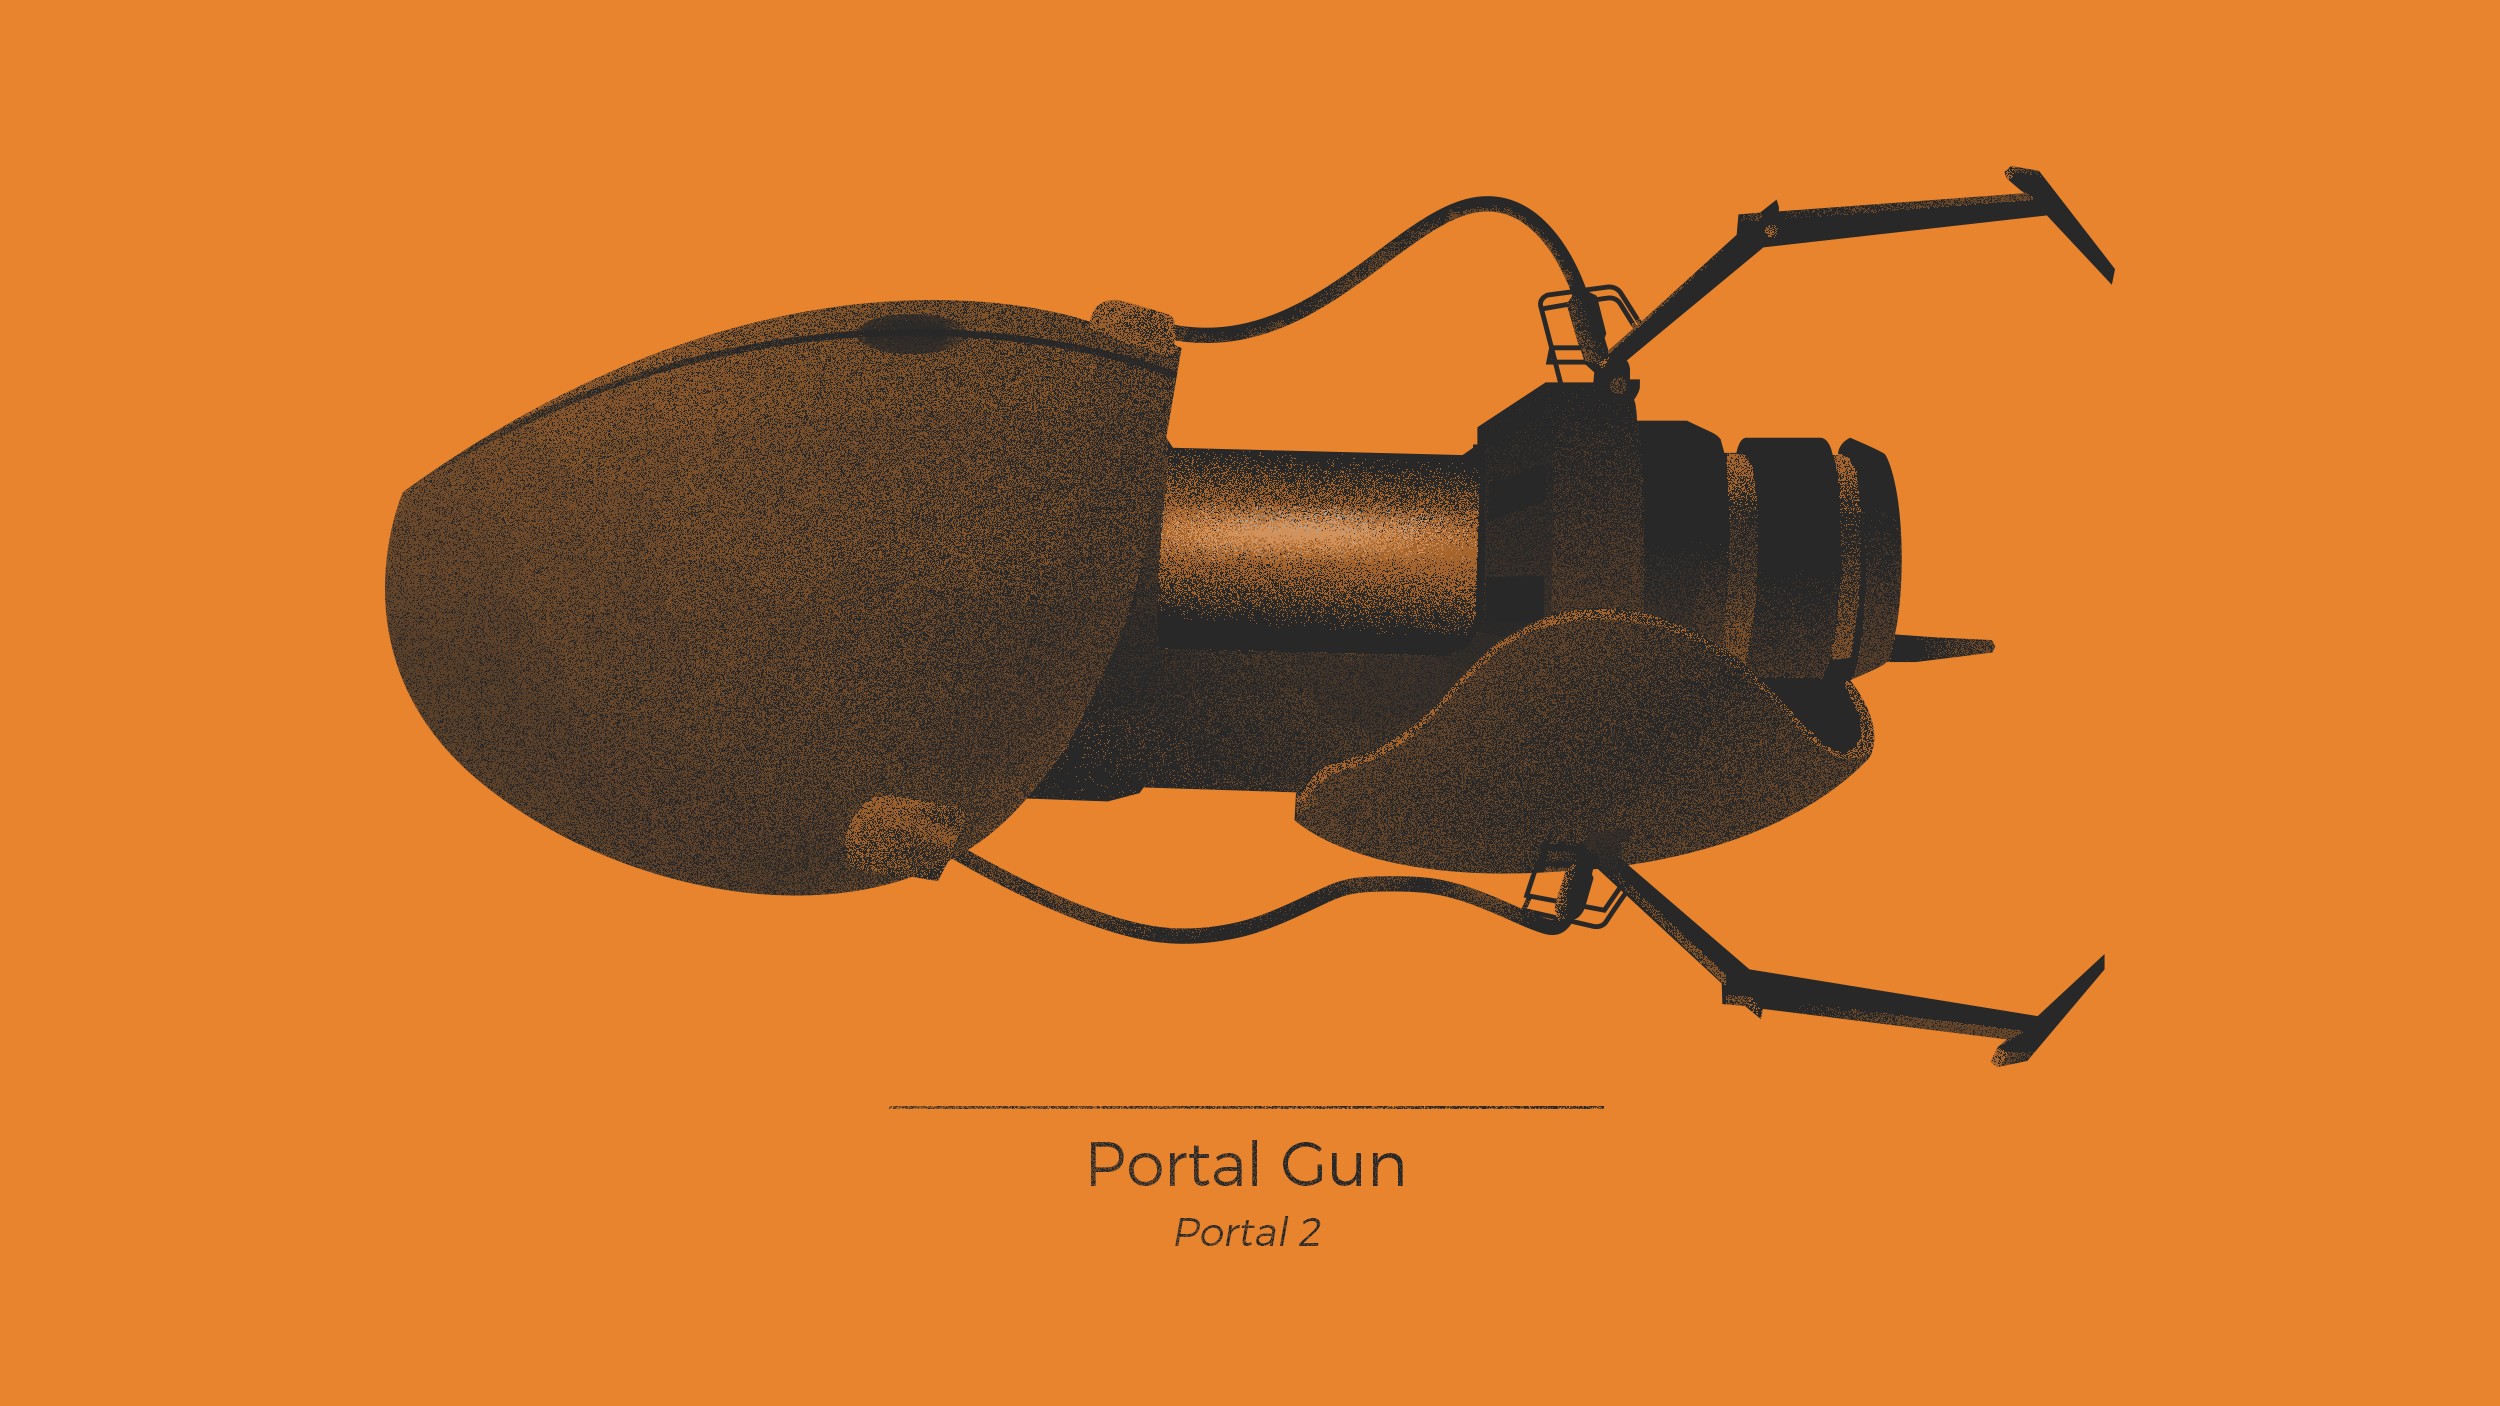 Portal 2, Portal Gun, Portal Wallpaper